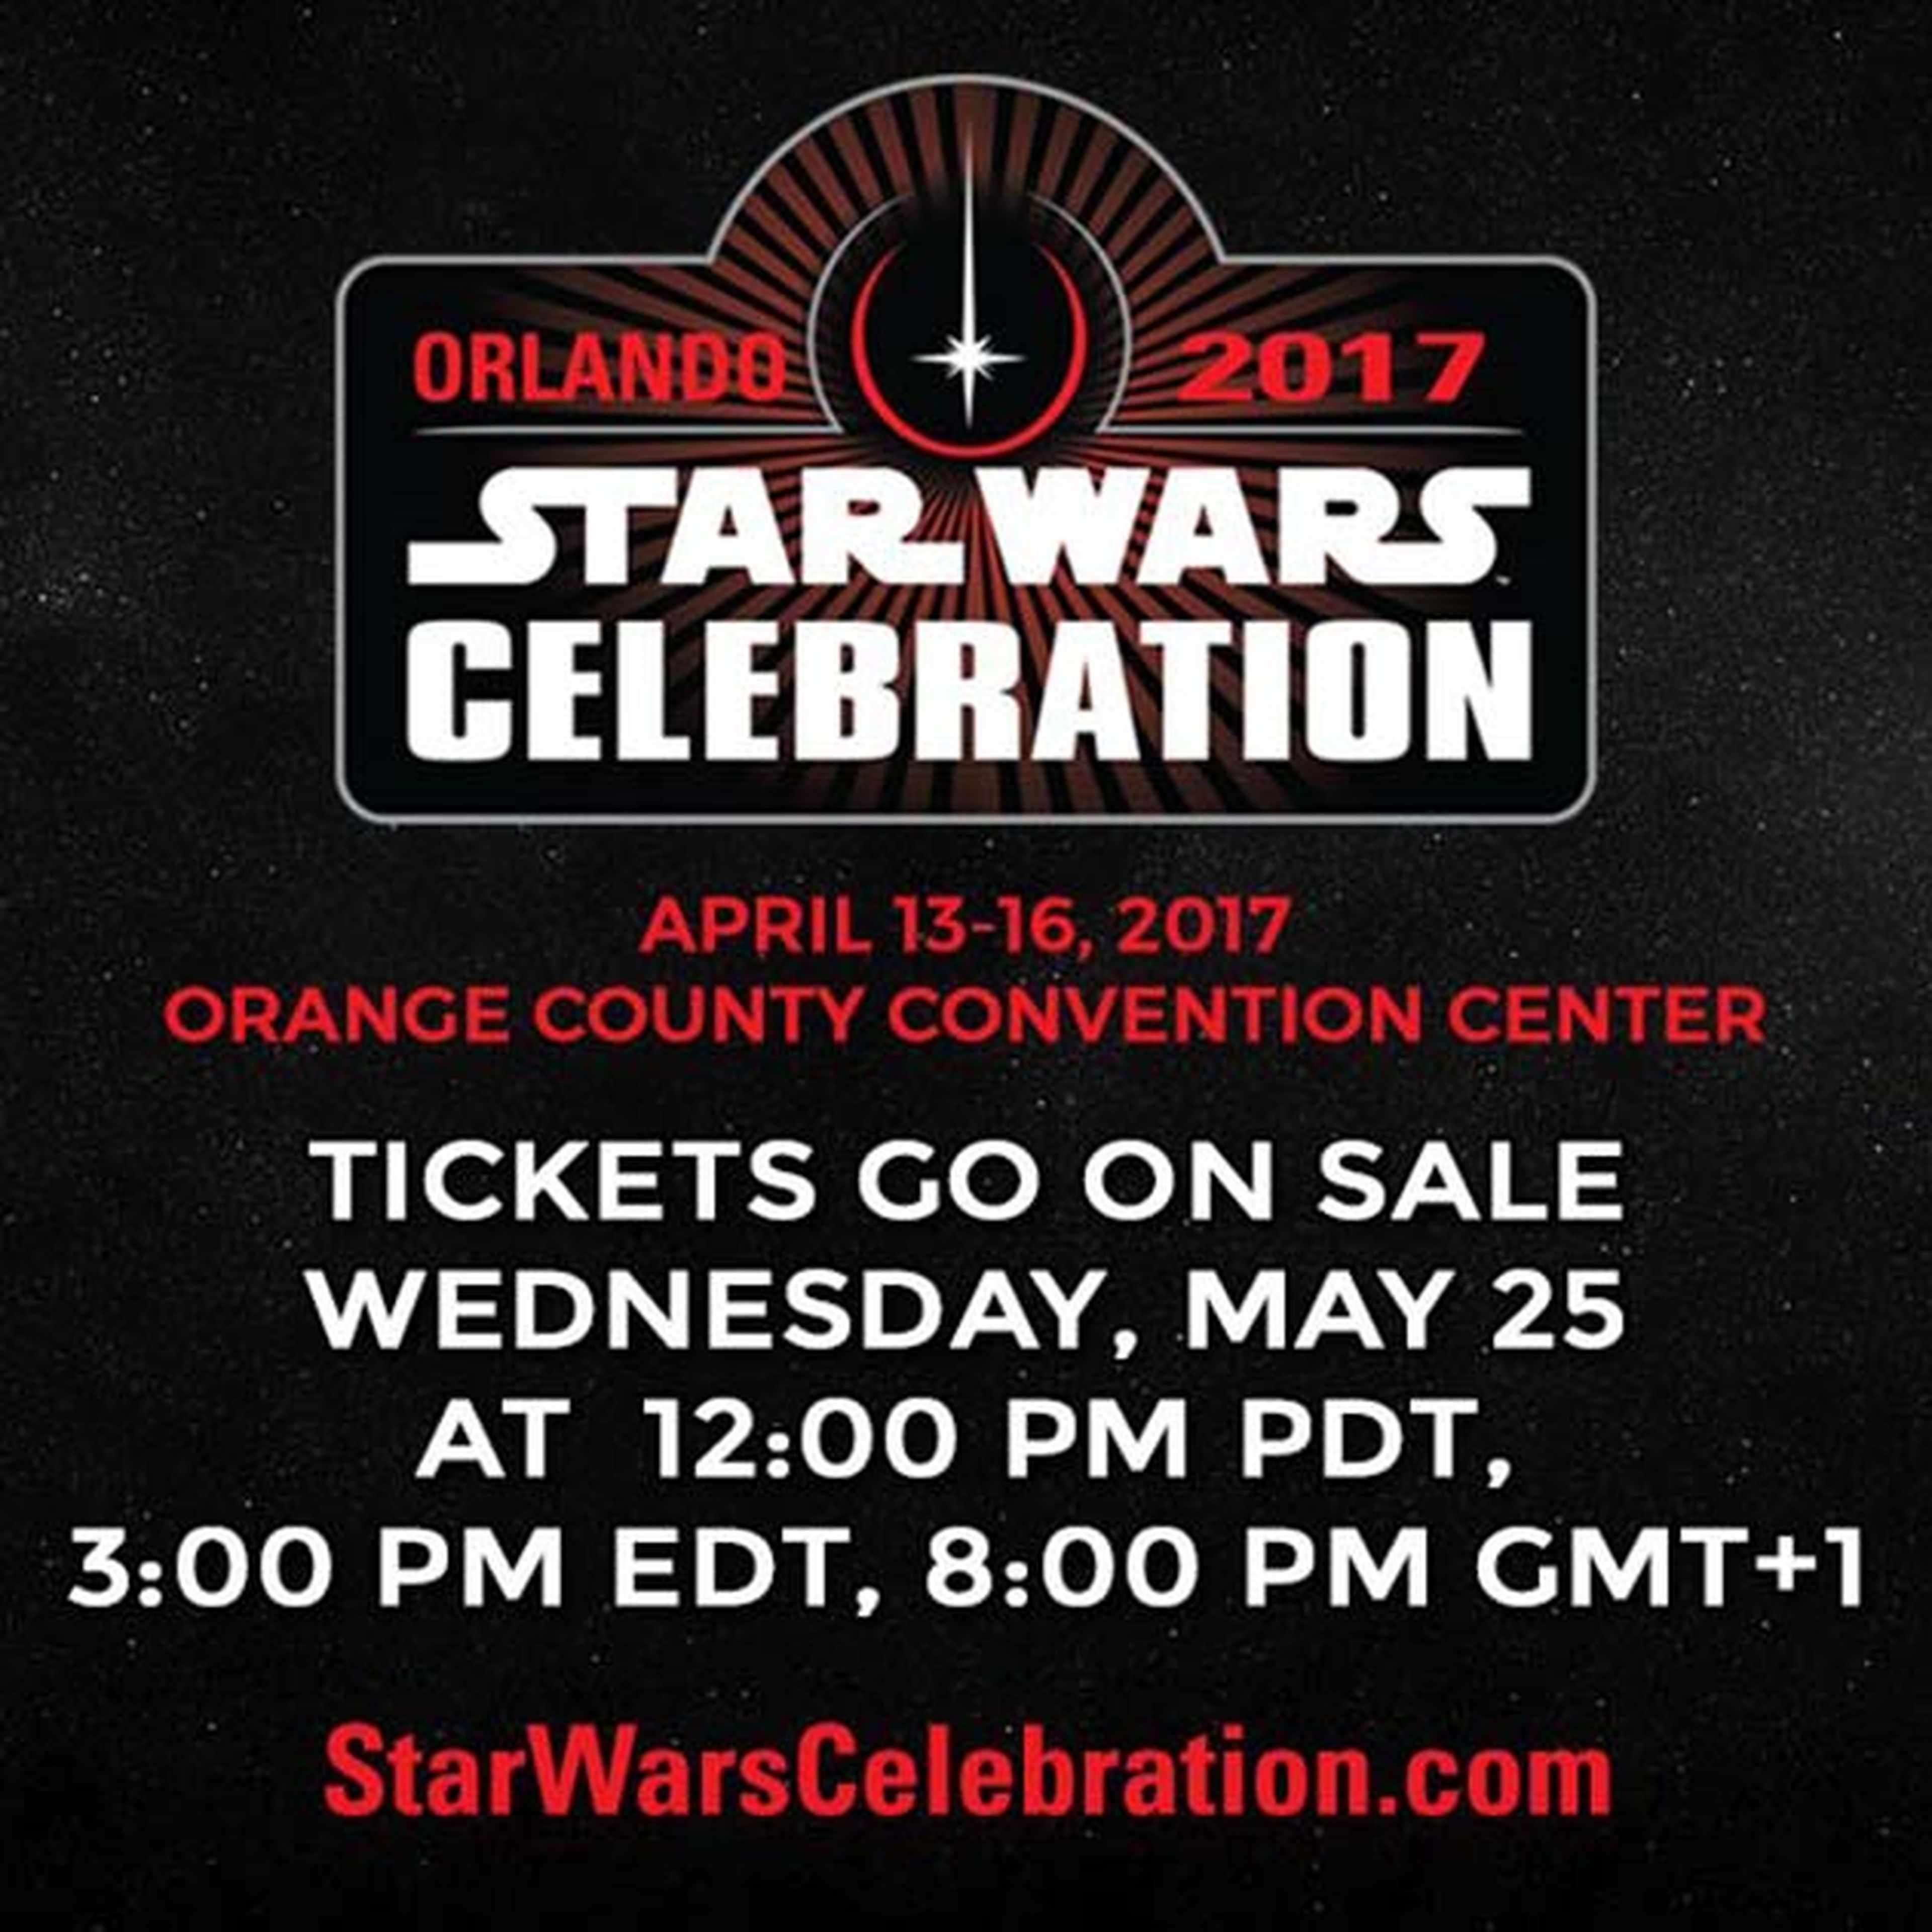 Star Wars Celebration 2017 se llevará a cabo en Orlando